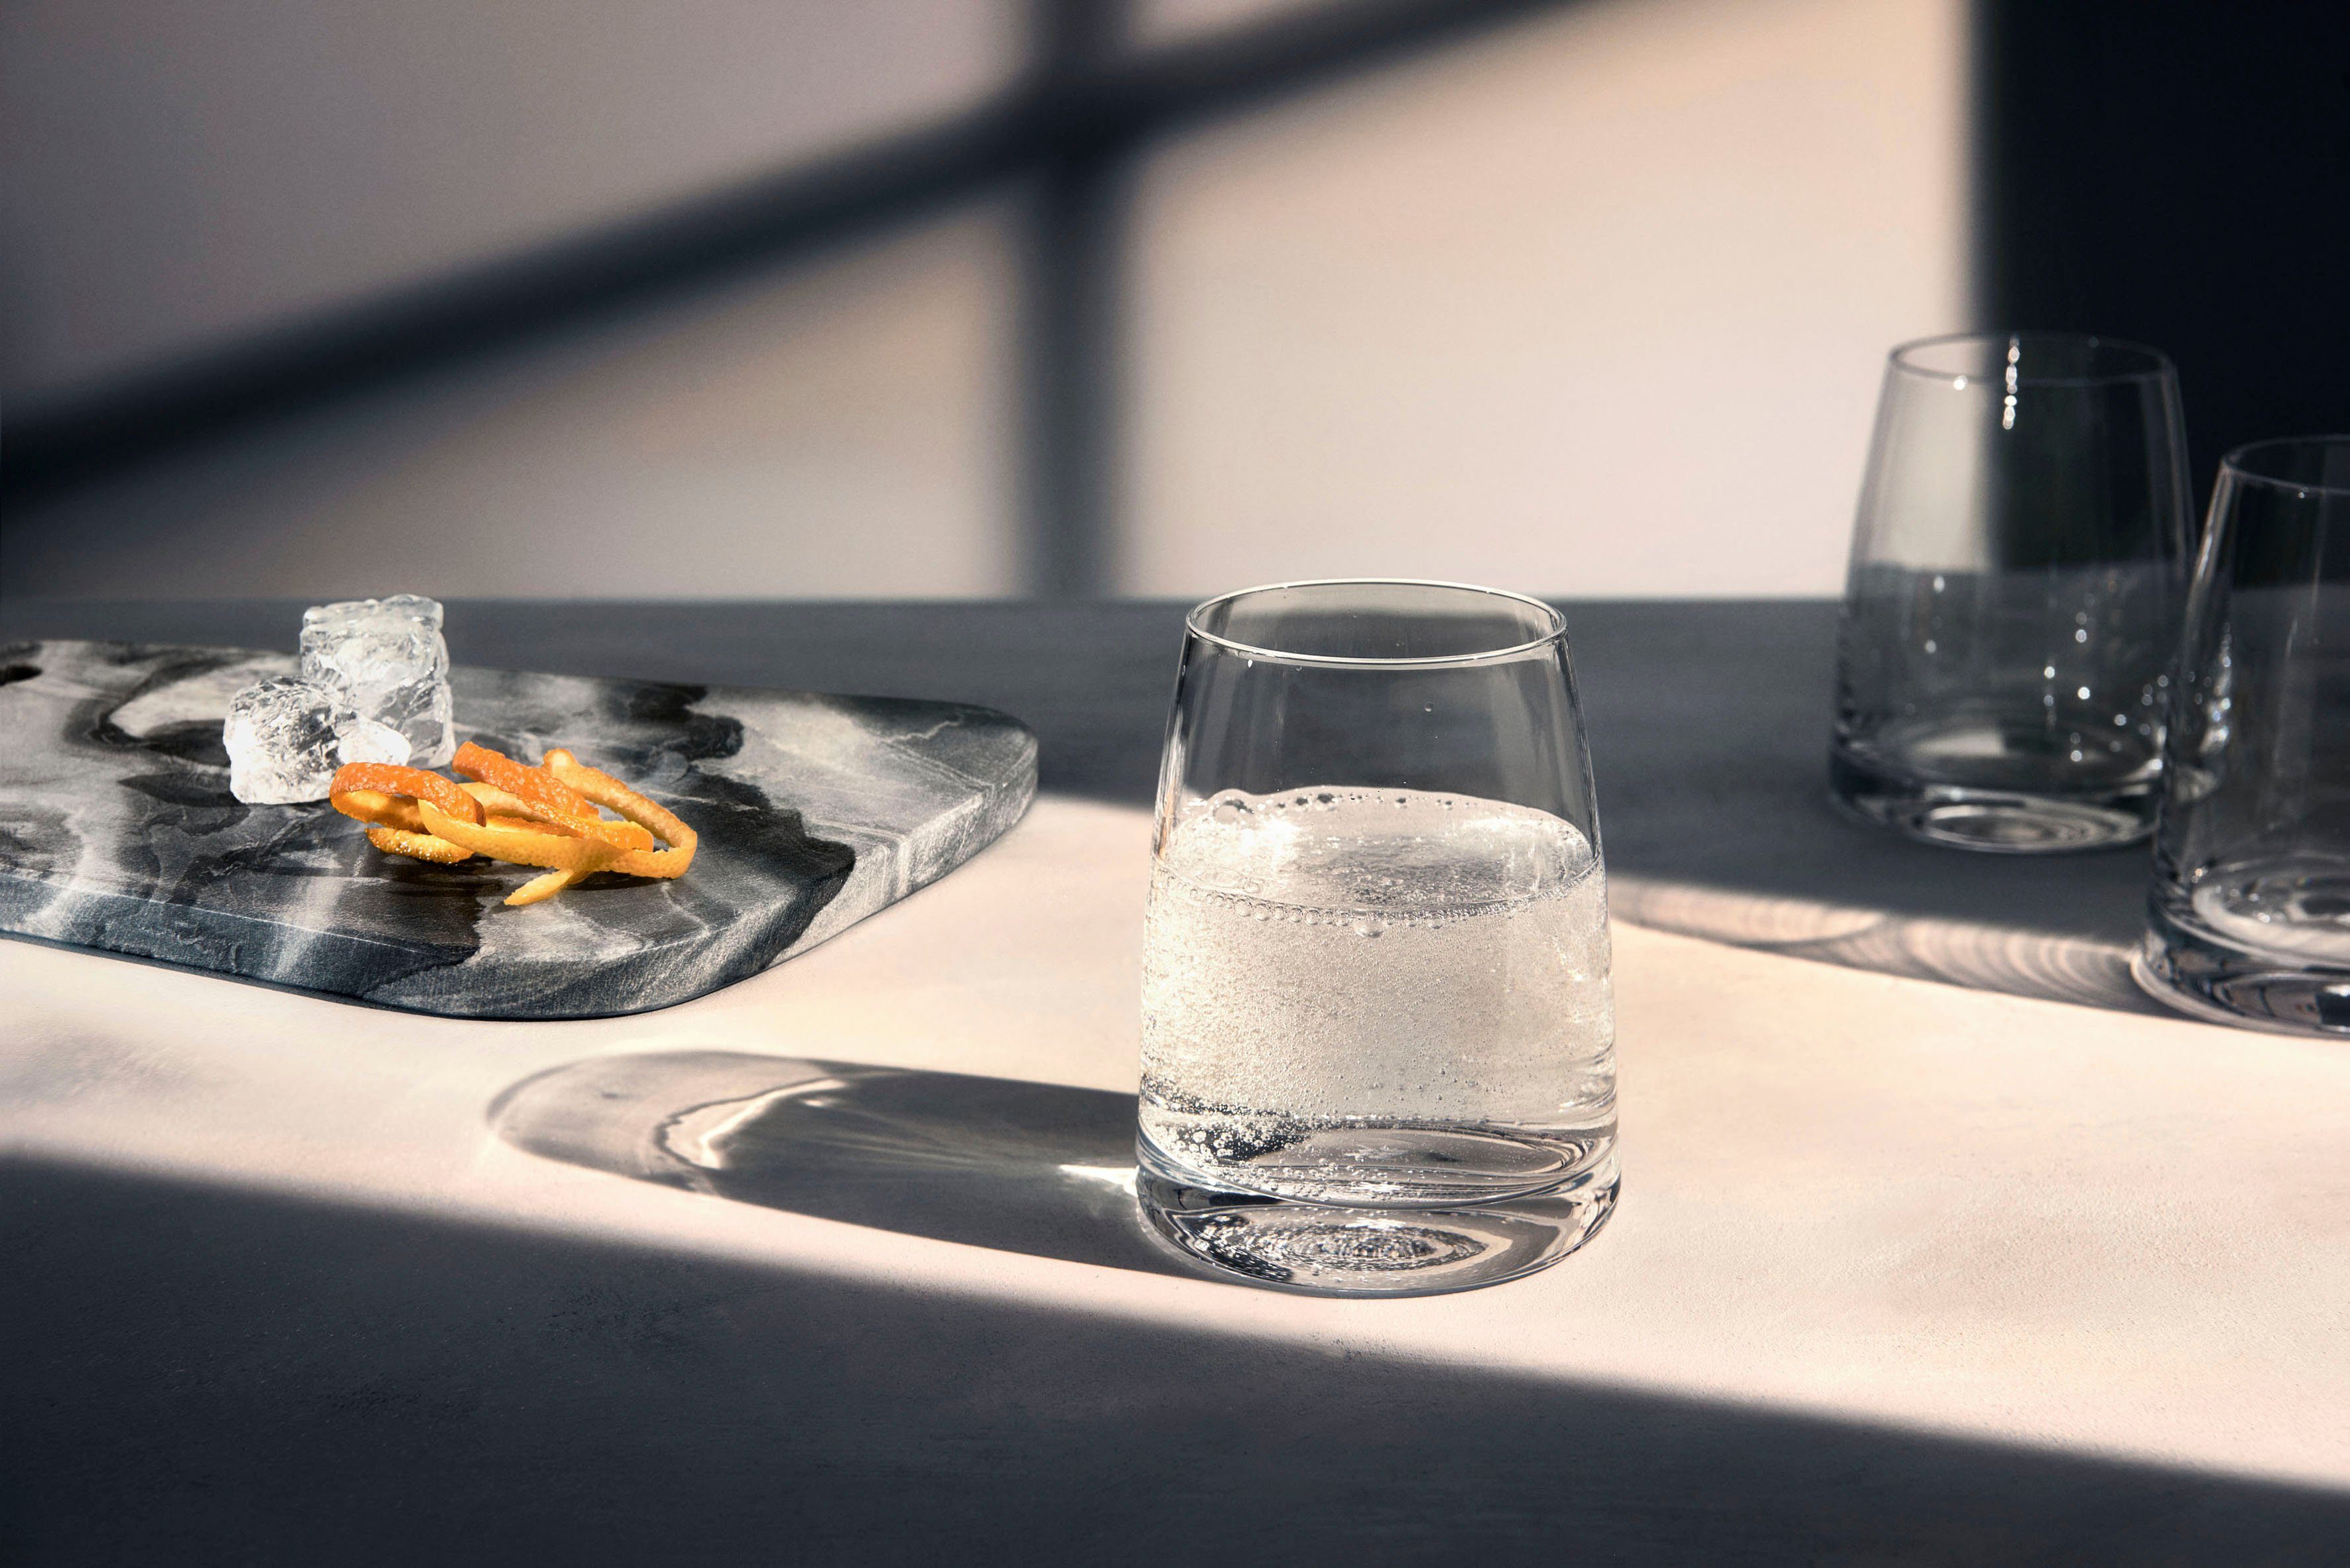 Kristallglas, WMF Tumbler-Glas Spülmaschinengeeignet Kineo,